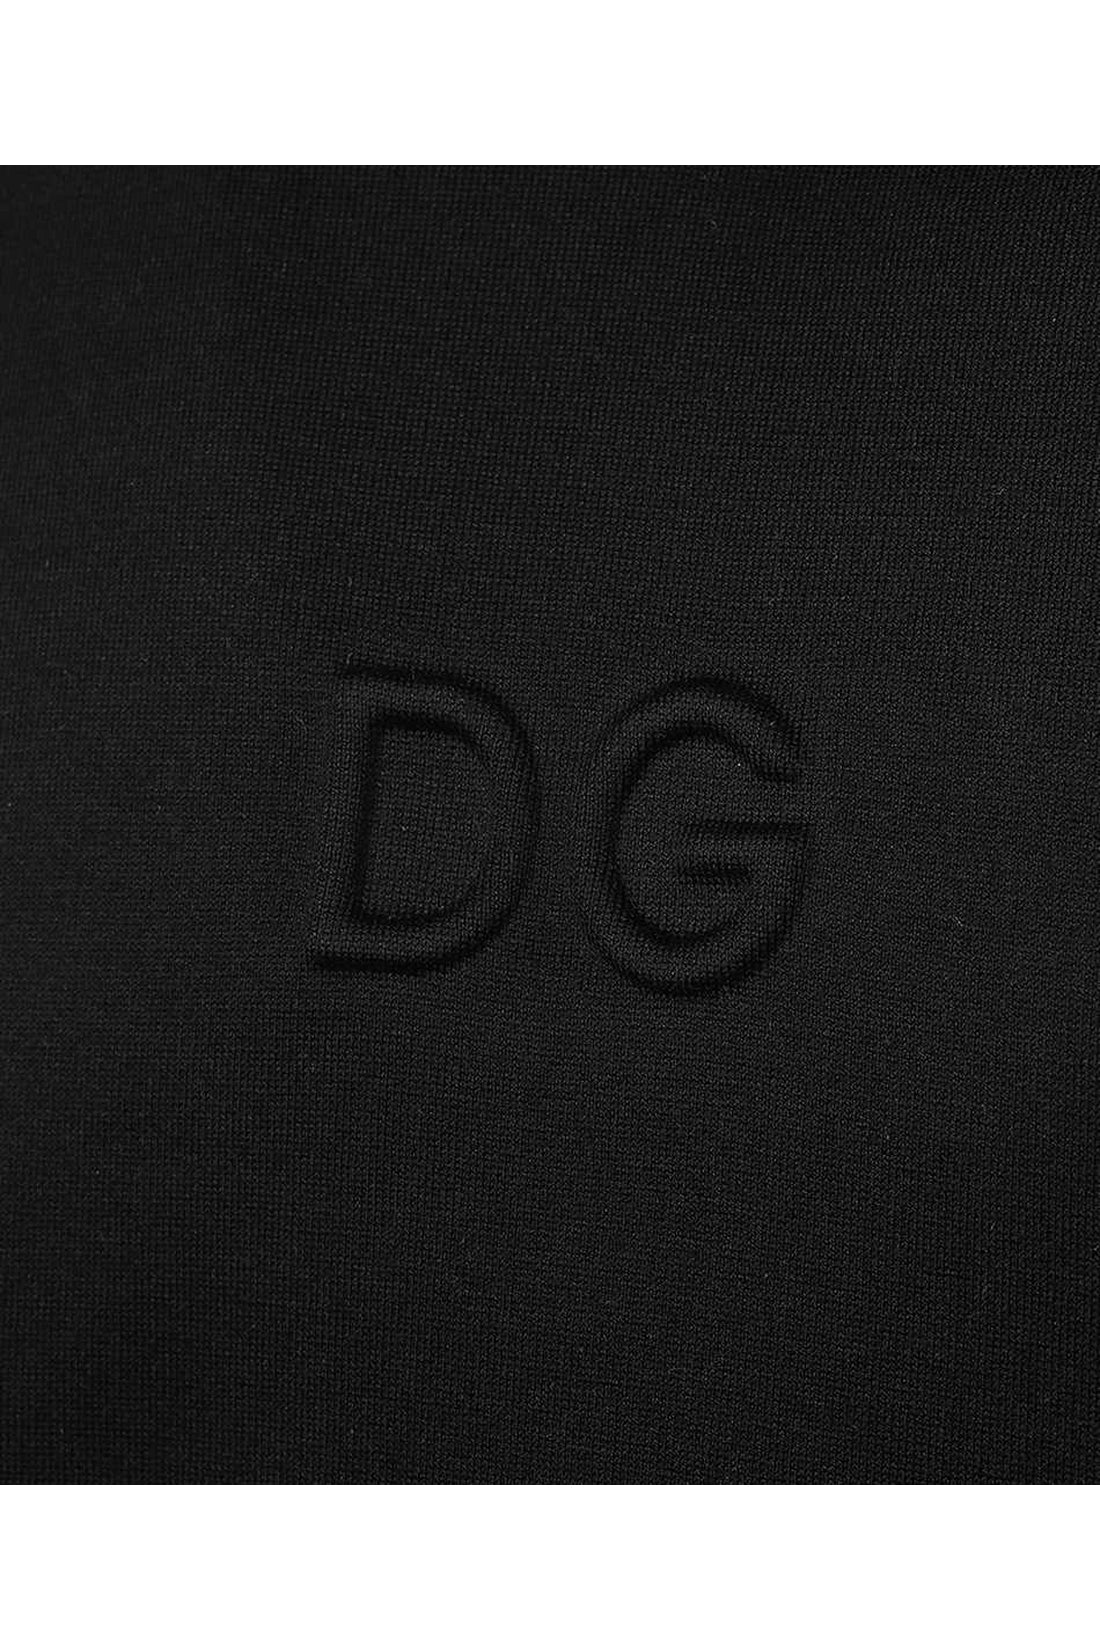 Dolce & Gabbana-OUTLET-SALE-Cotton hoodie-ARCHIVIST